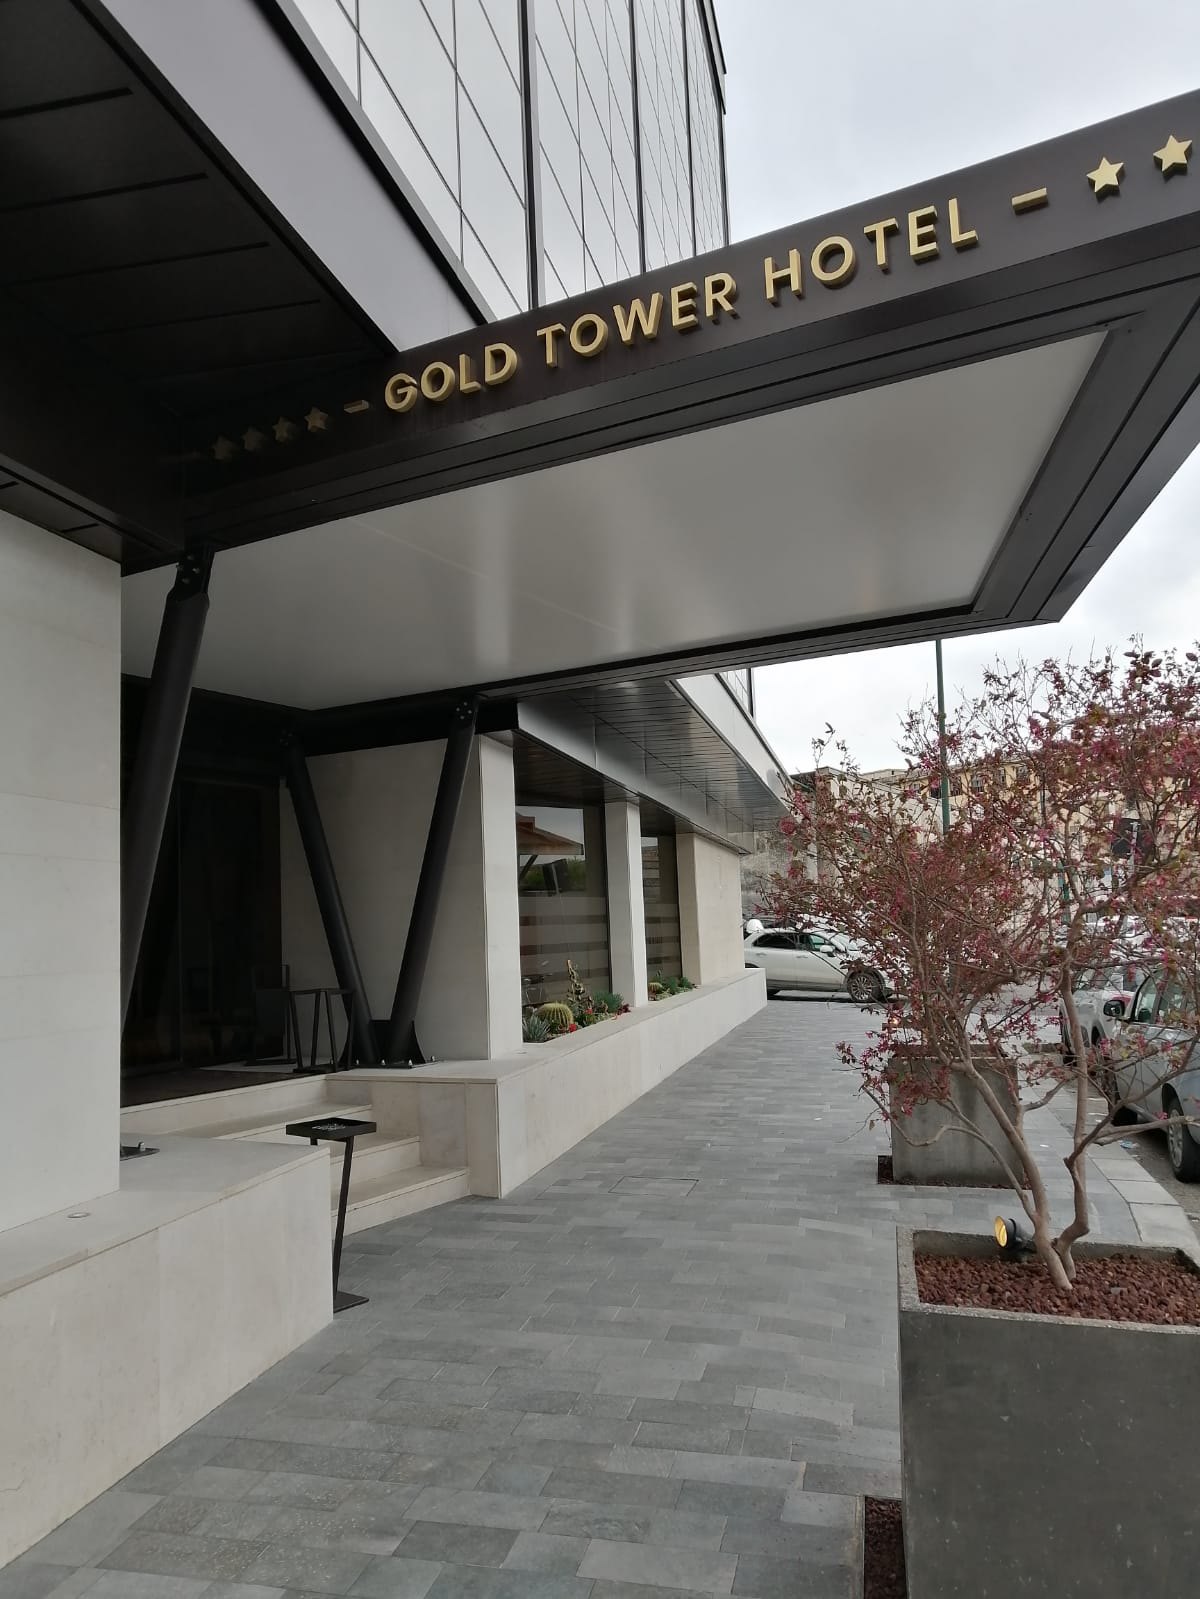 Hotel Gold Tower Lifestyle in Tour – Rilancio di Gianturco